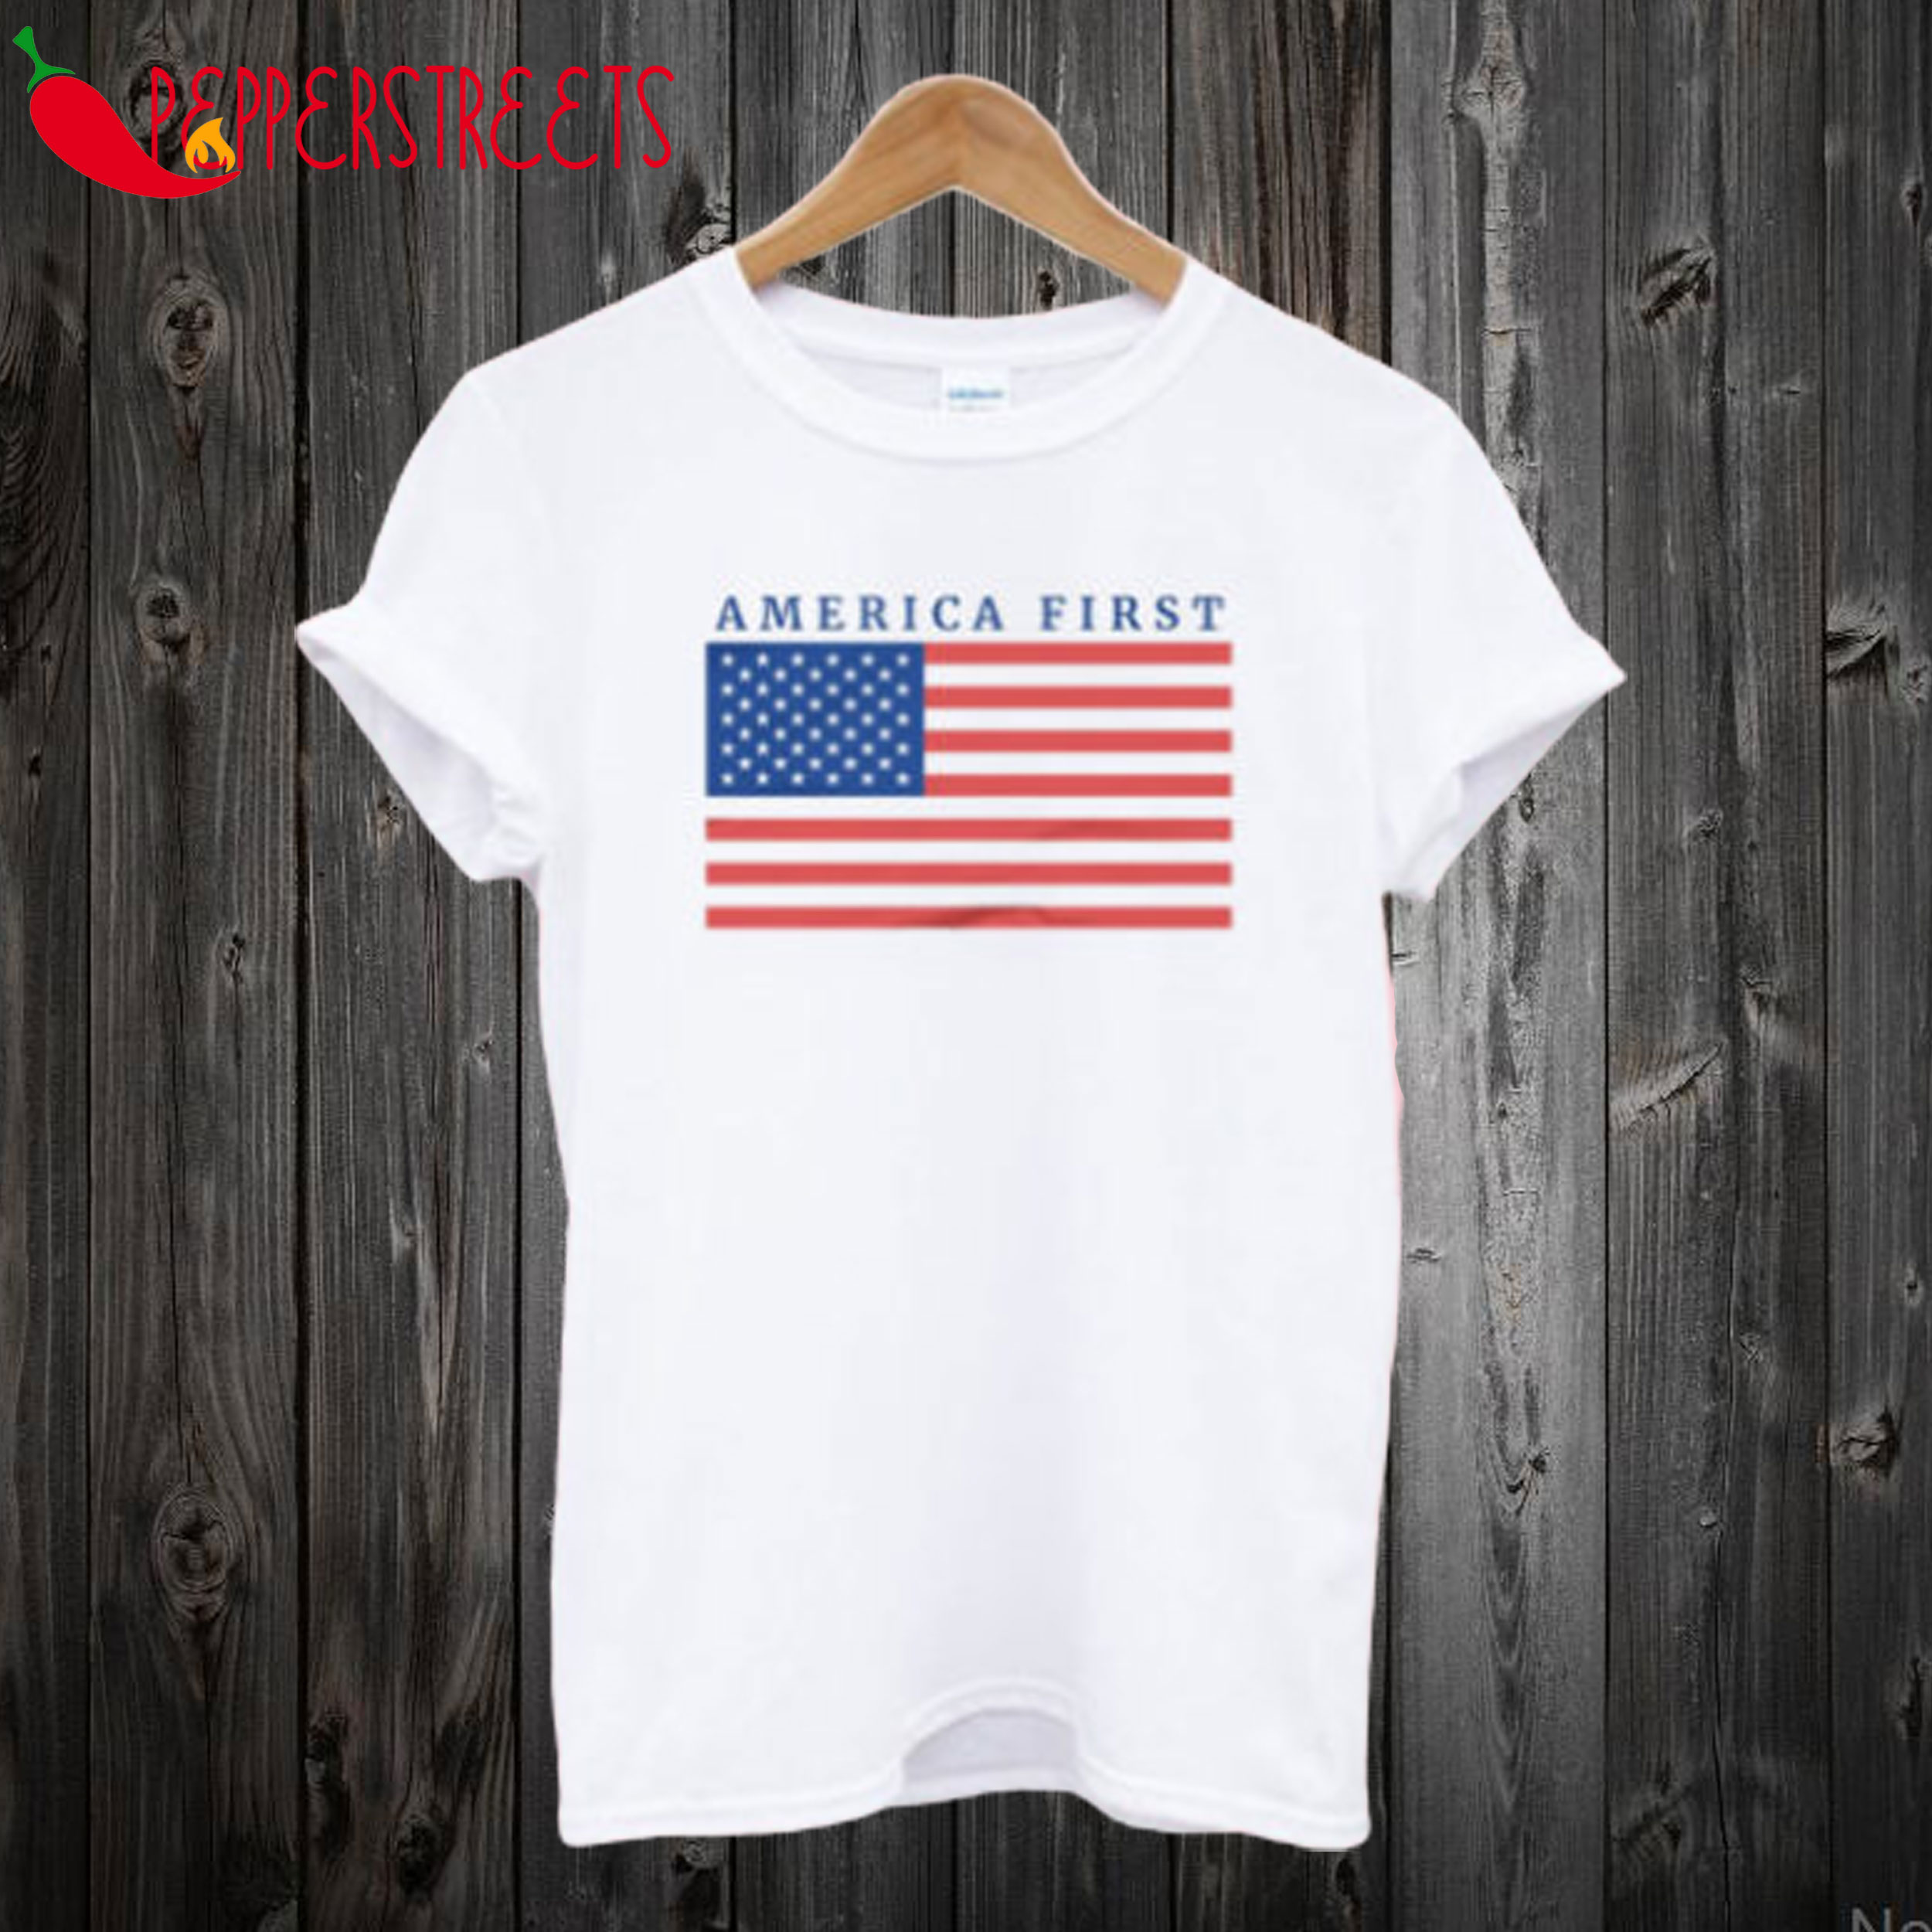 America First T shirt